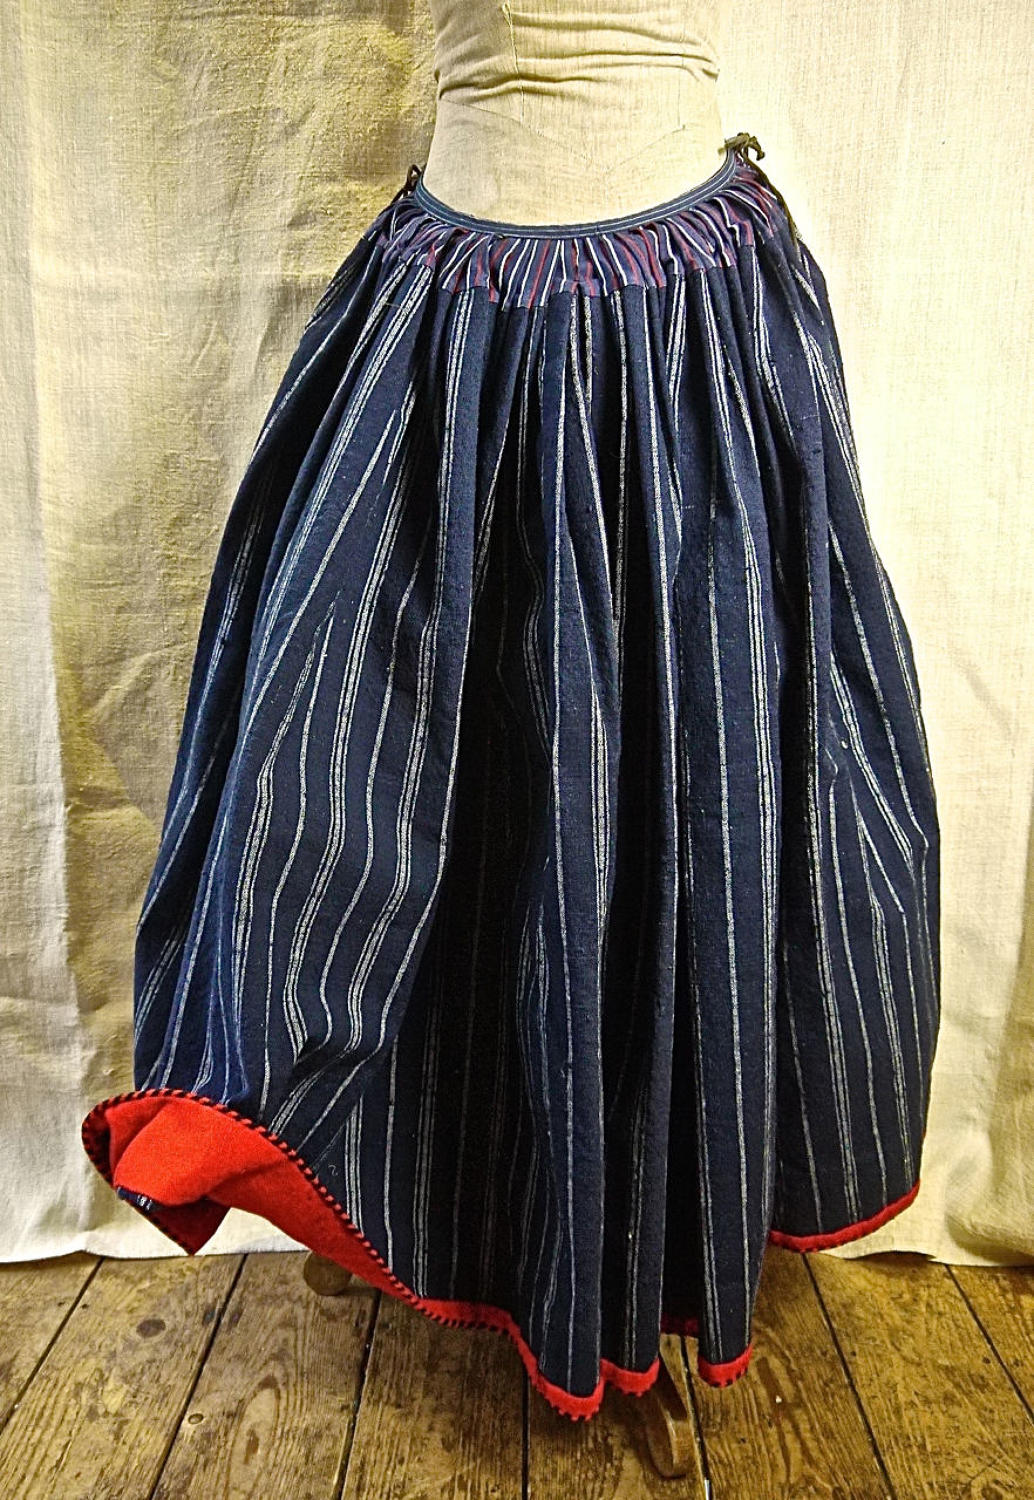 Indigo Striped Wool Linen Skirt French 19th Century